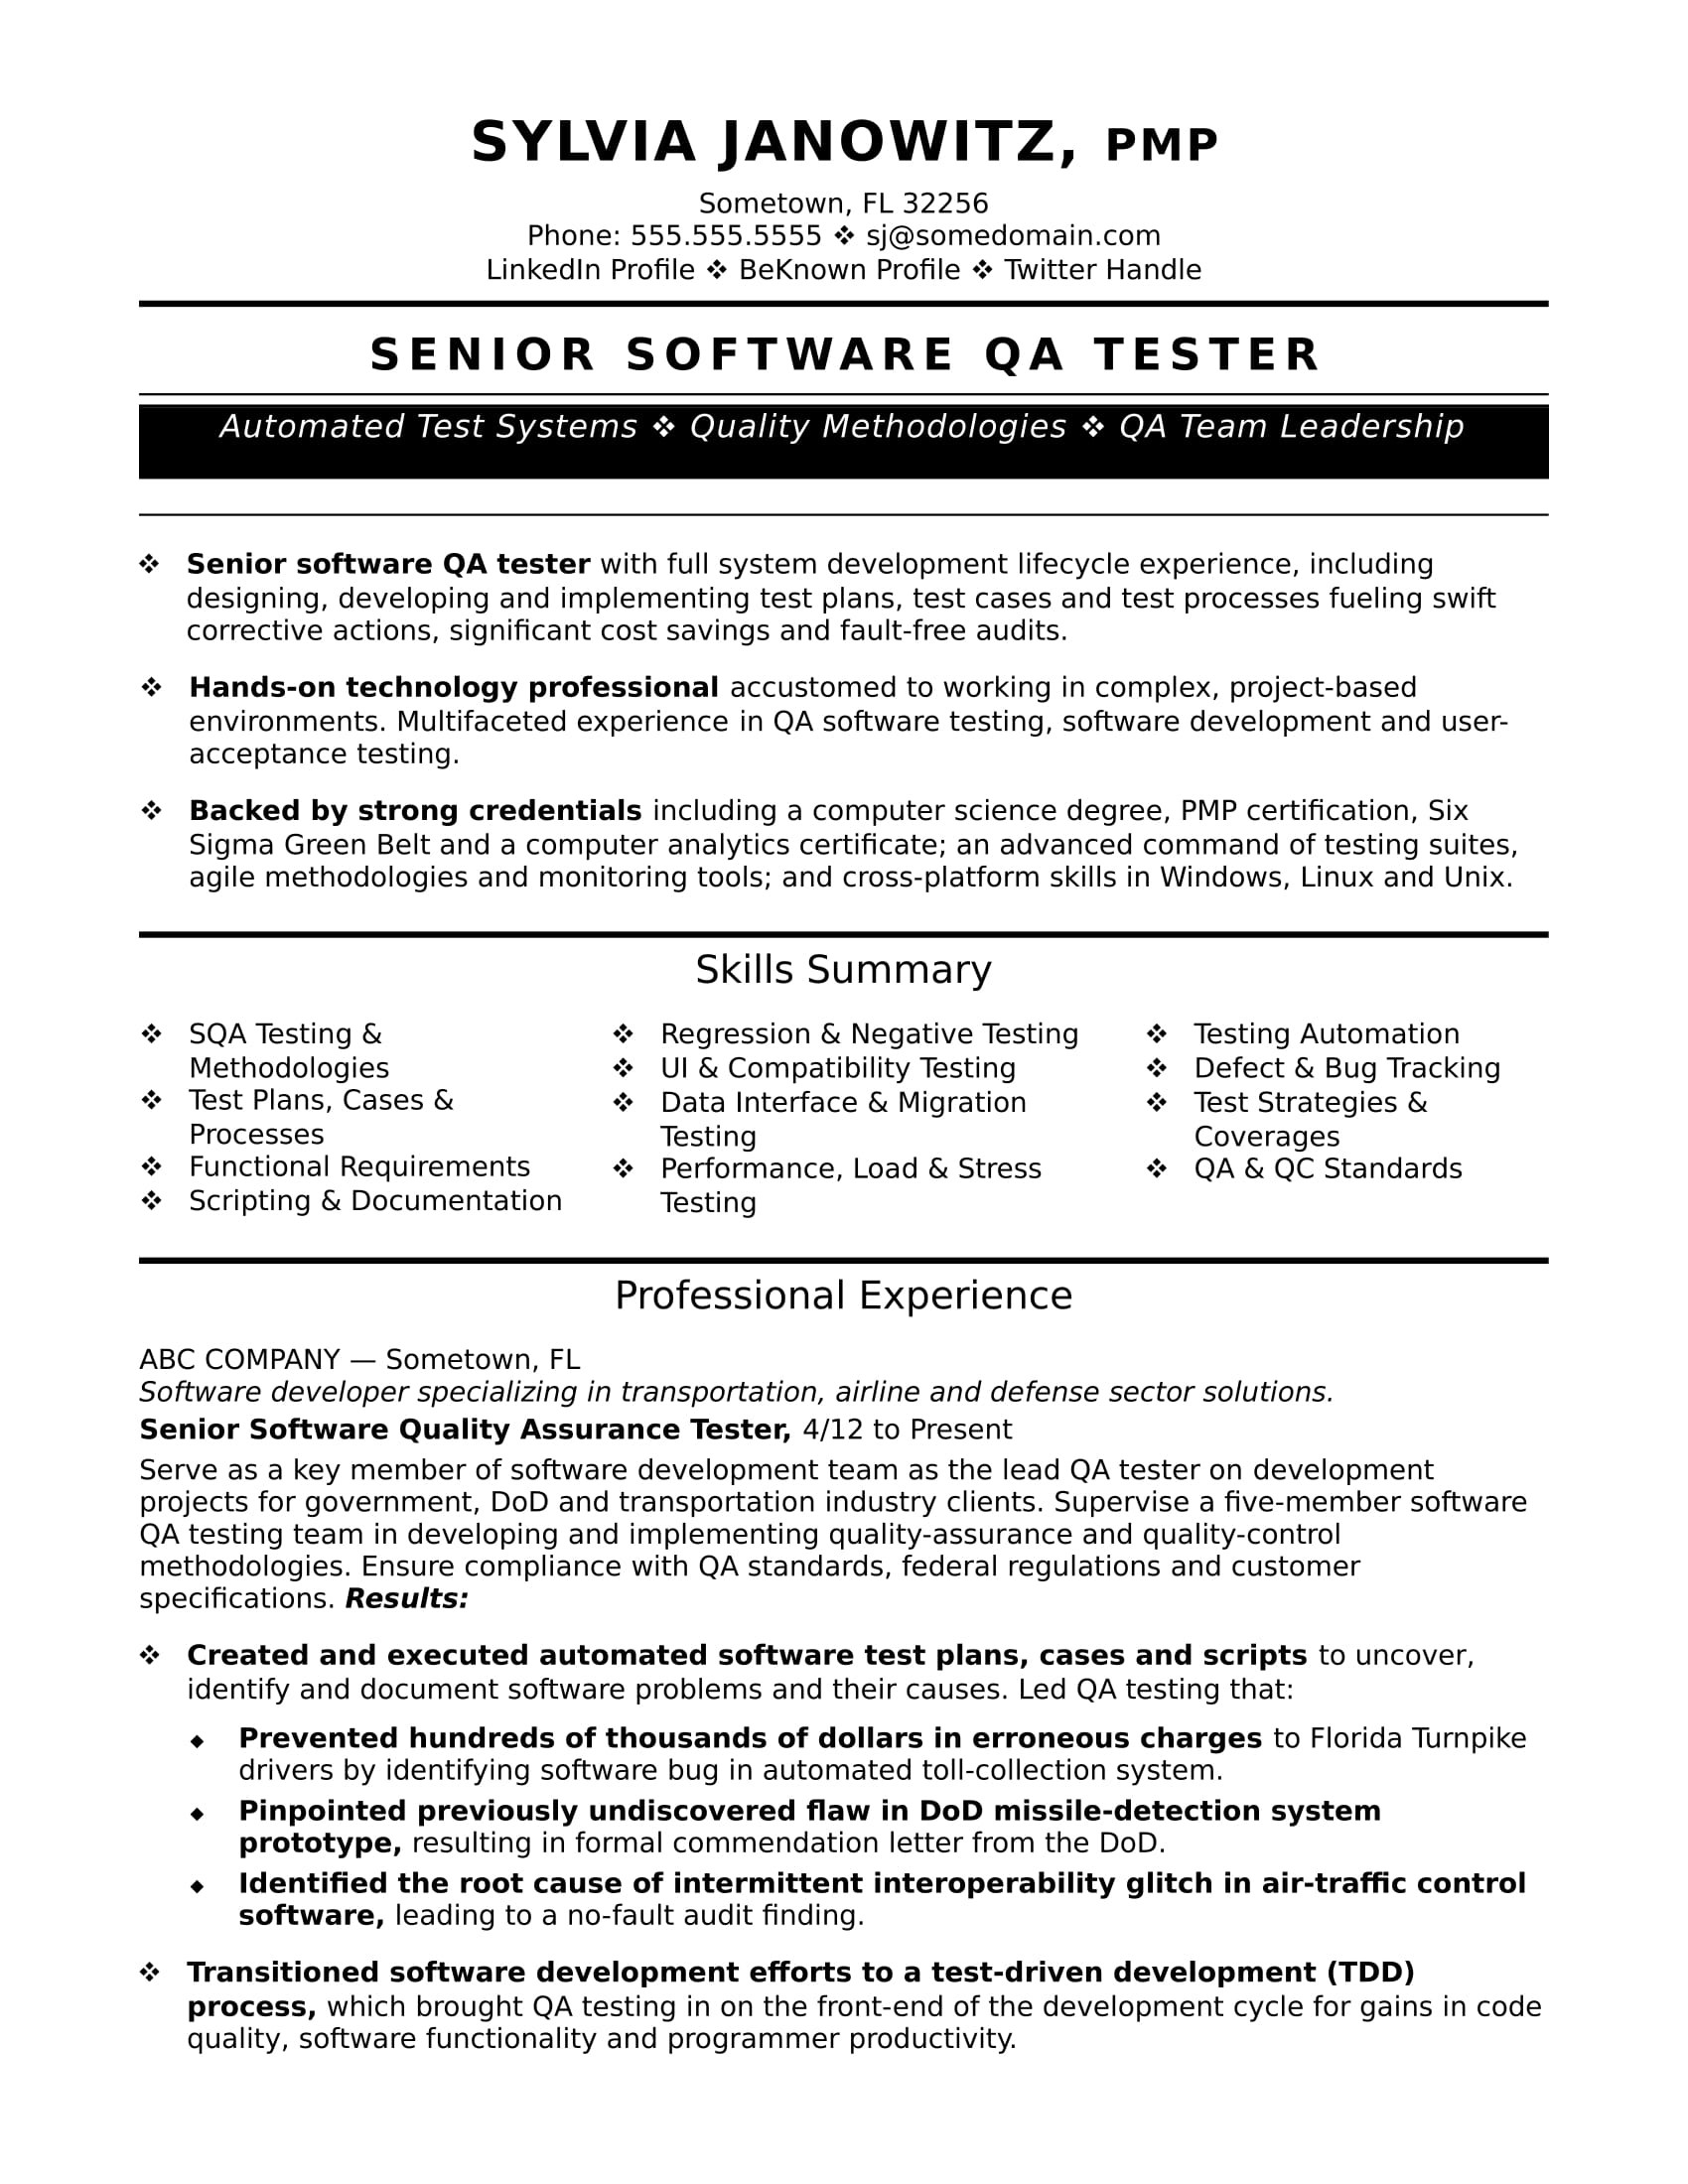 Sample softwre Testing Resume for 4 Experienced Experienced Qa software Tester Resume Sample Monster.com